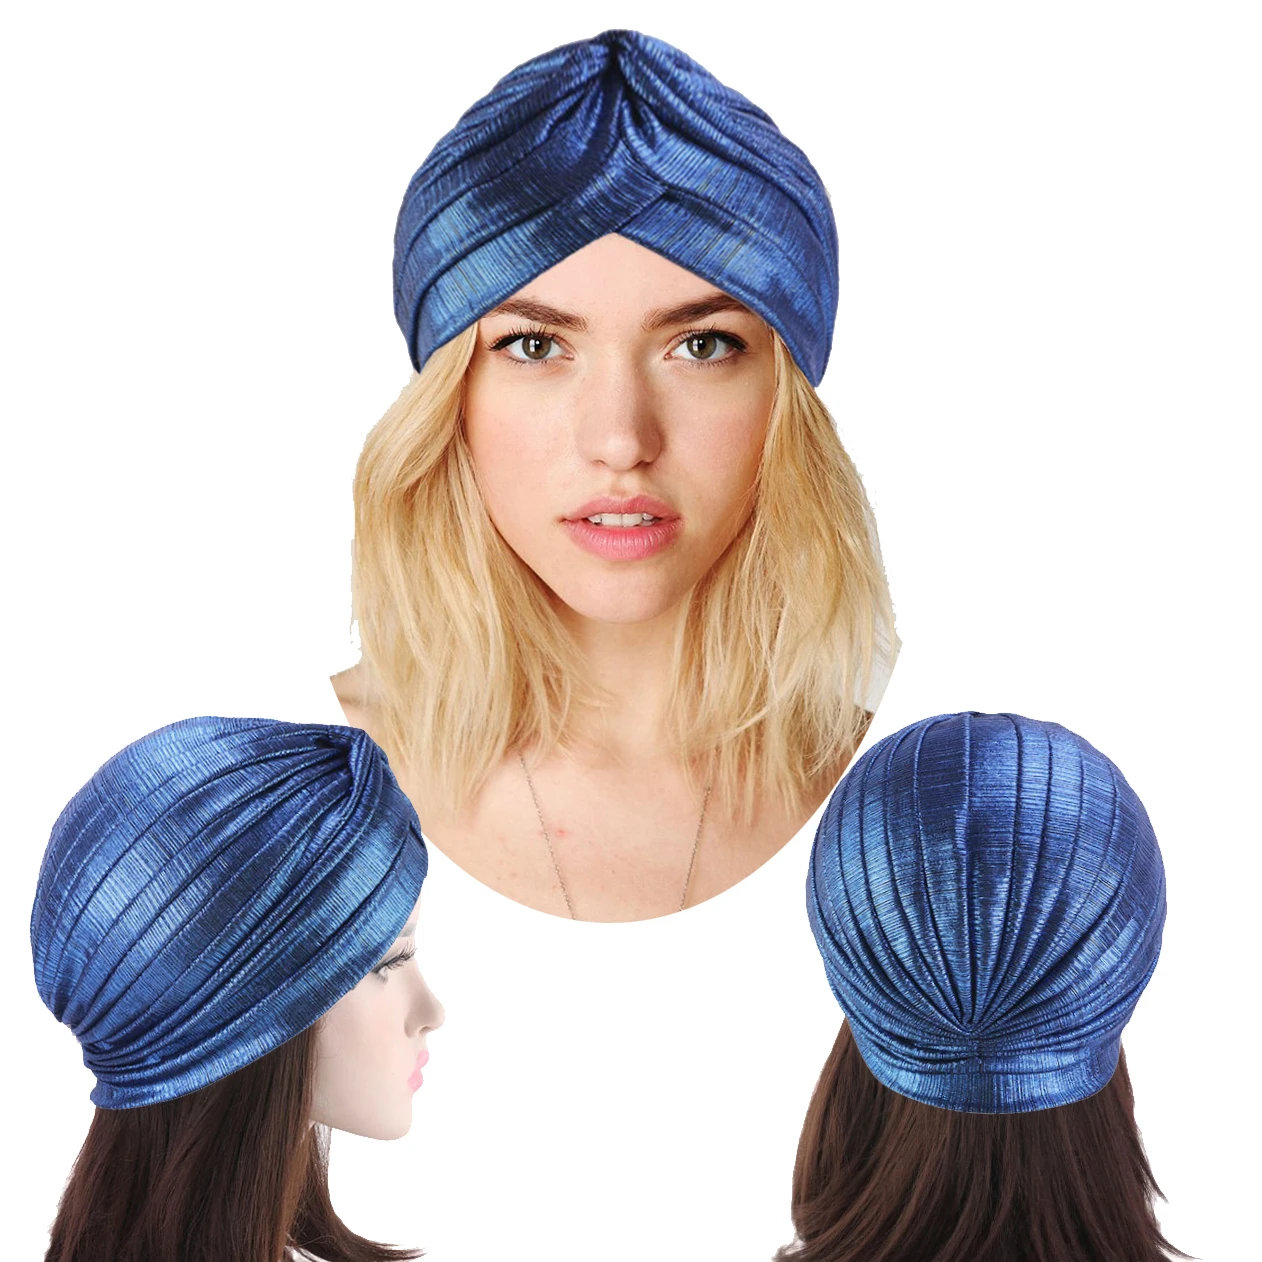 Metallic Woman Turban Headband Hairwrap Bandanas Solid Accessories Headwear Female Turbans for Girls Hat Cap 2019 6 Colors| |